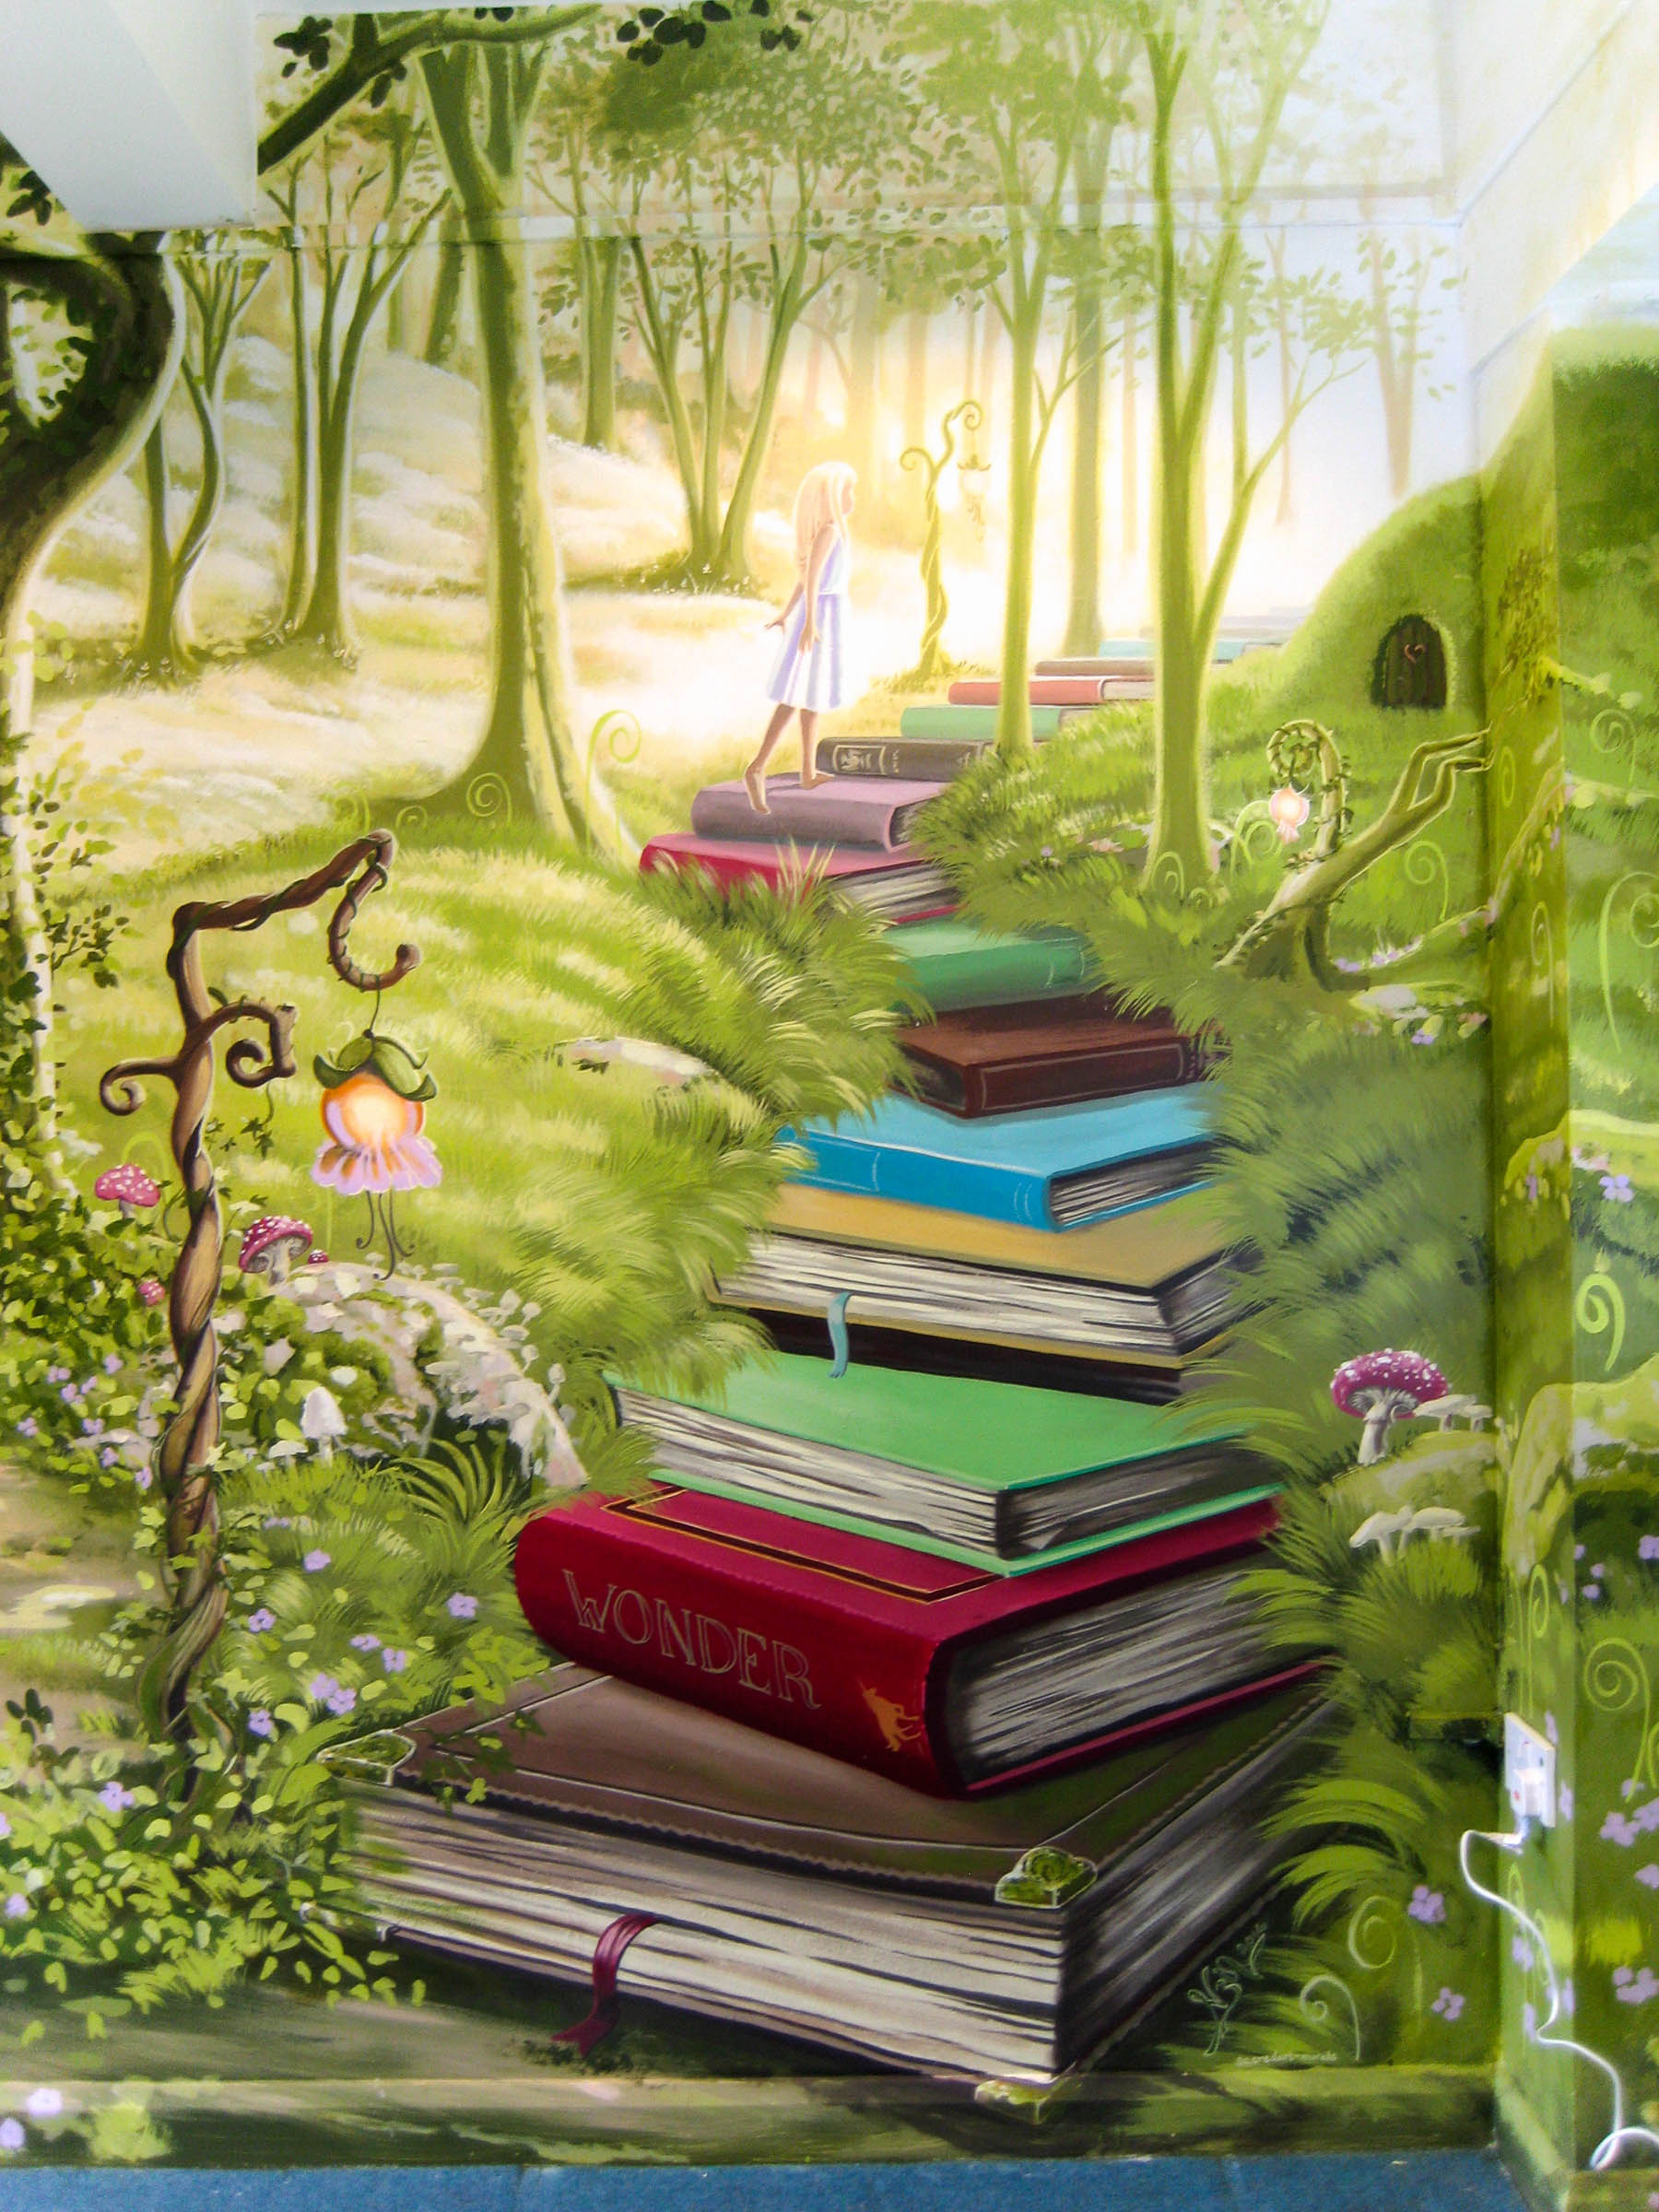 Devon School Library mural book stairs in sunlit woodland